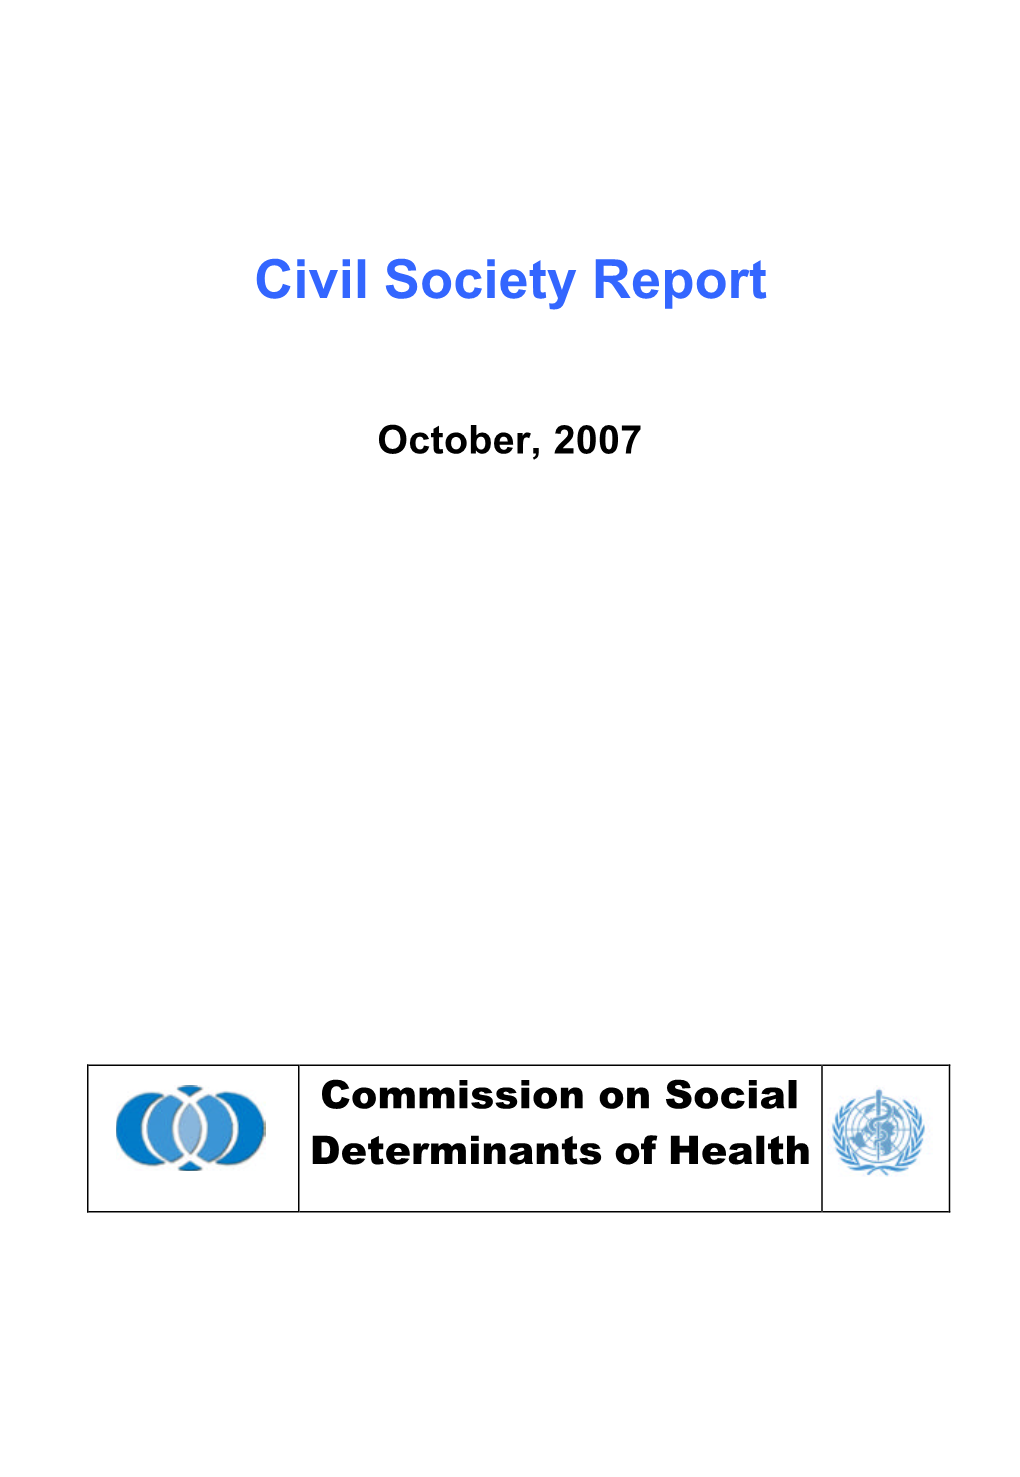 Civil Society Report on Social Determinants of Health